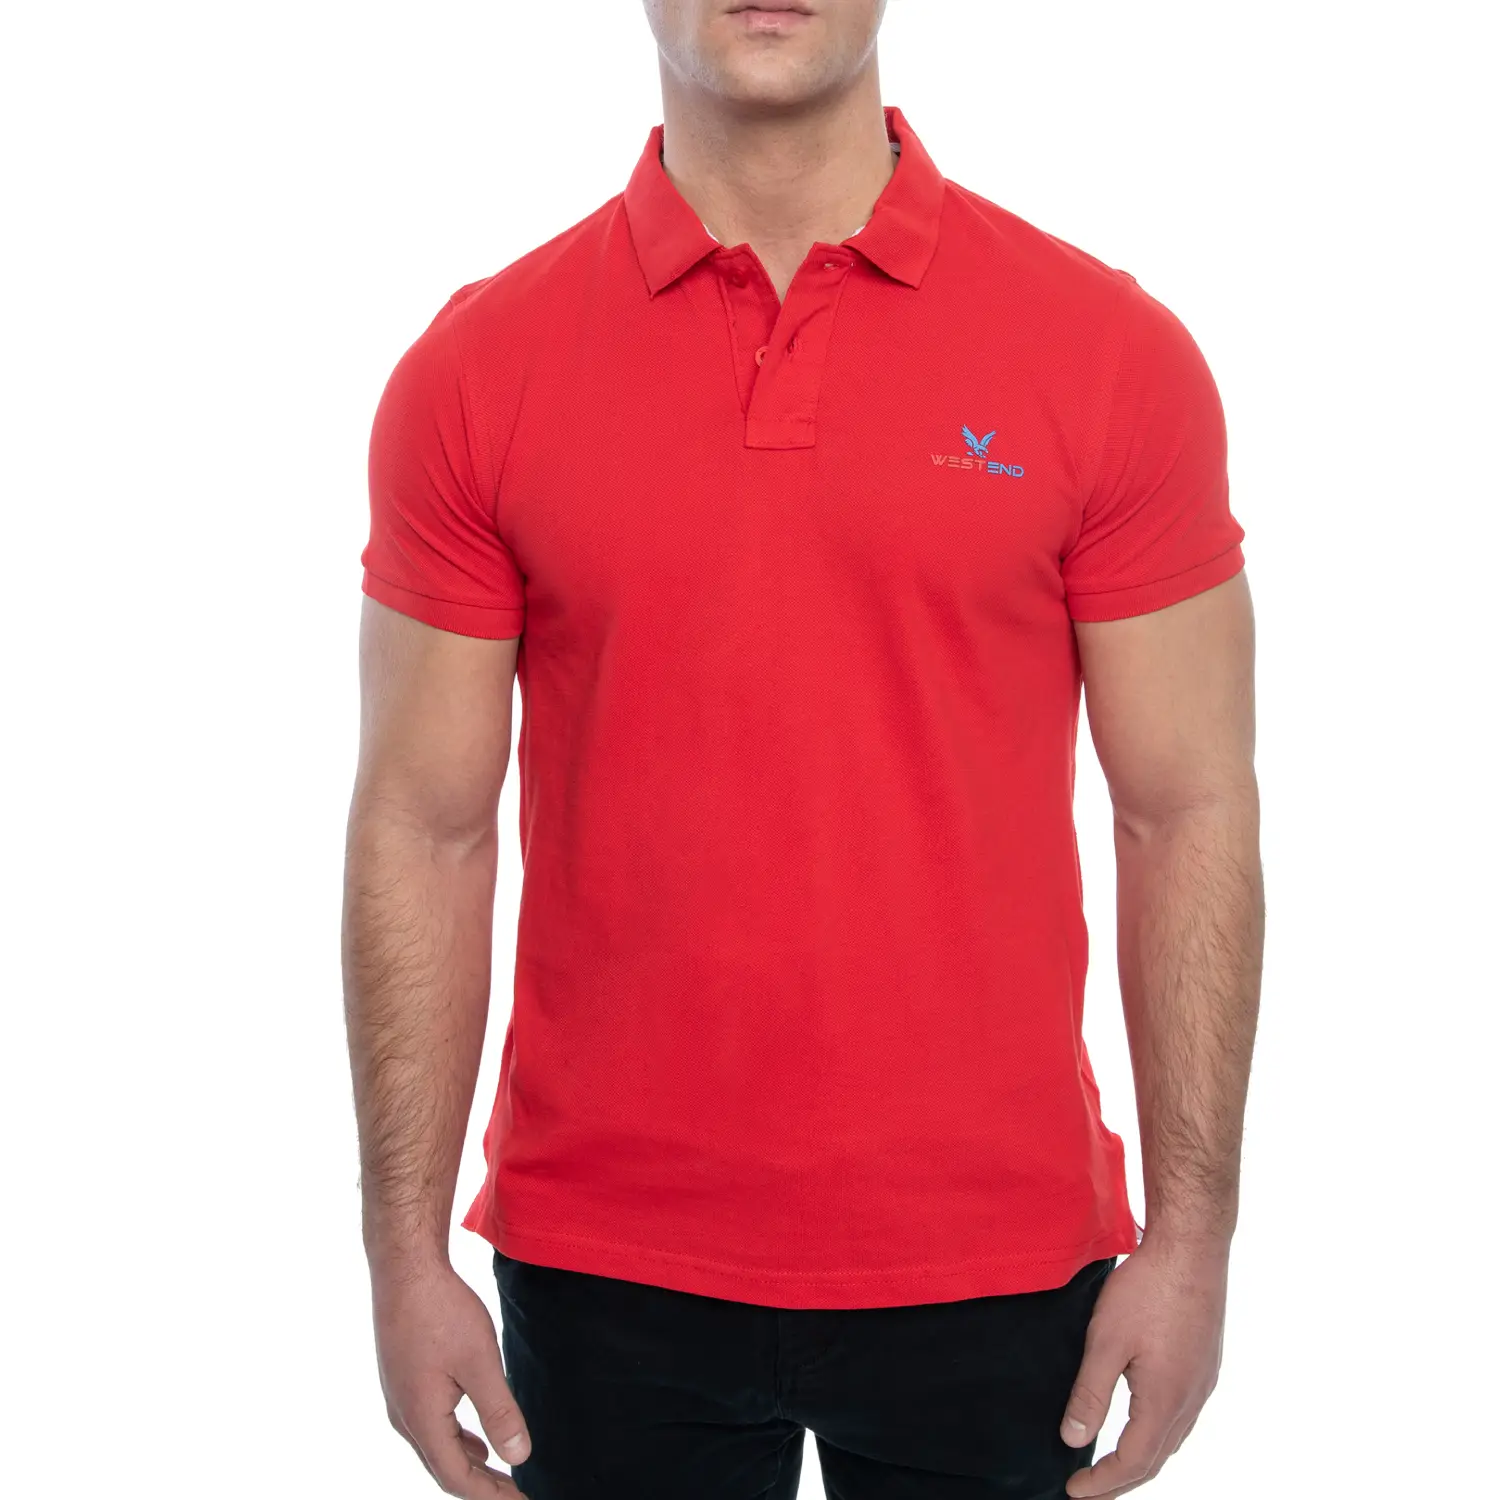 Men's Short Sleeve Polo Shirts